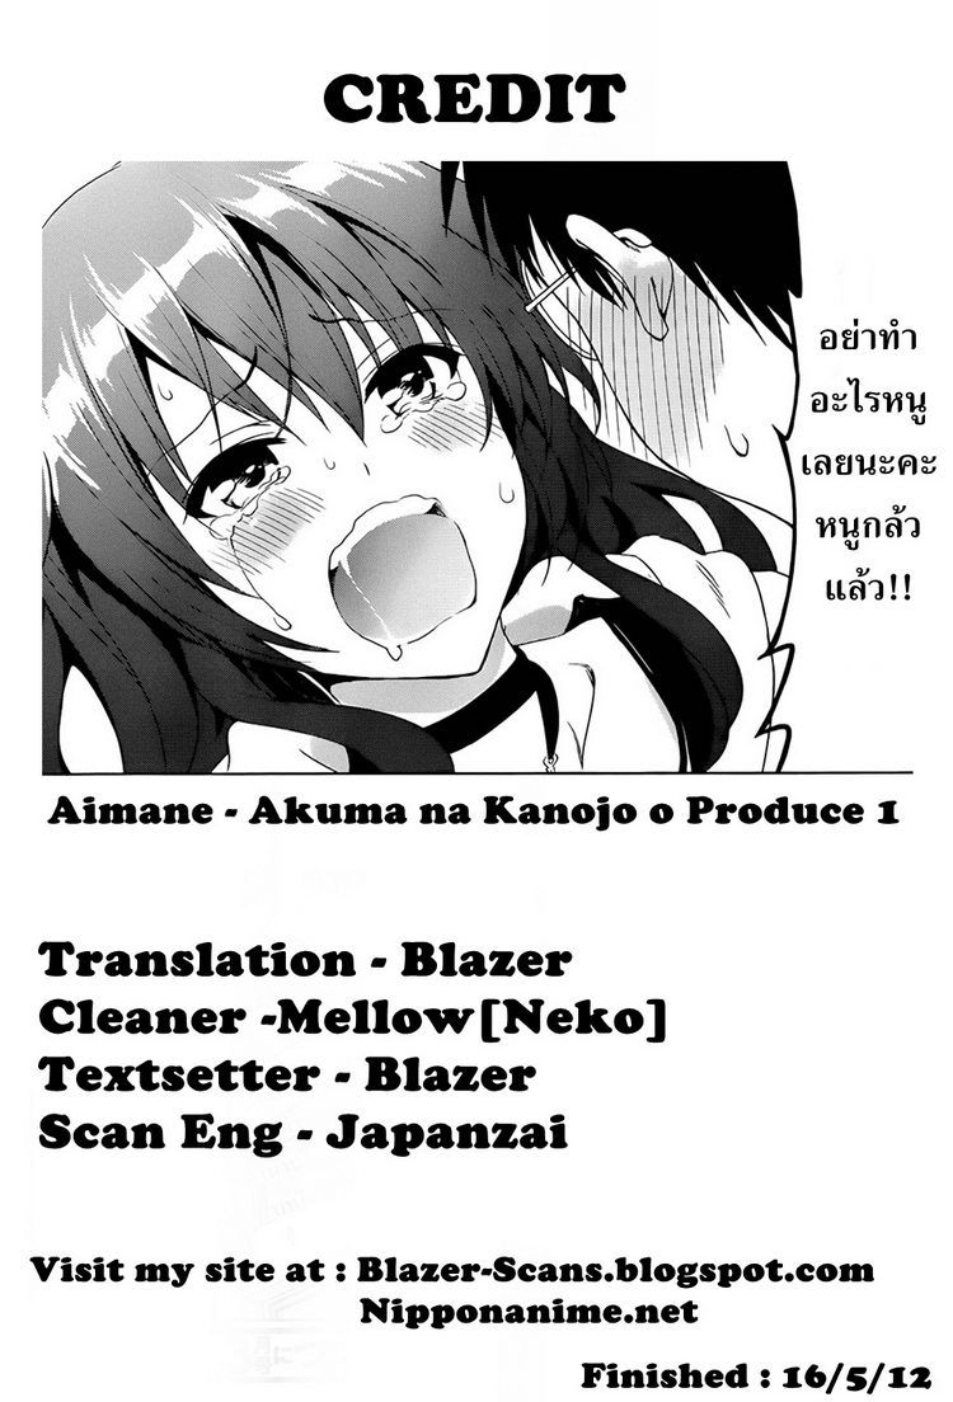 Aimane: Akuma na Kanojo wo Produce